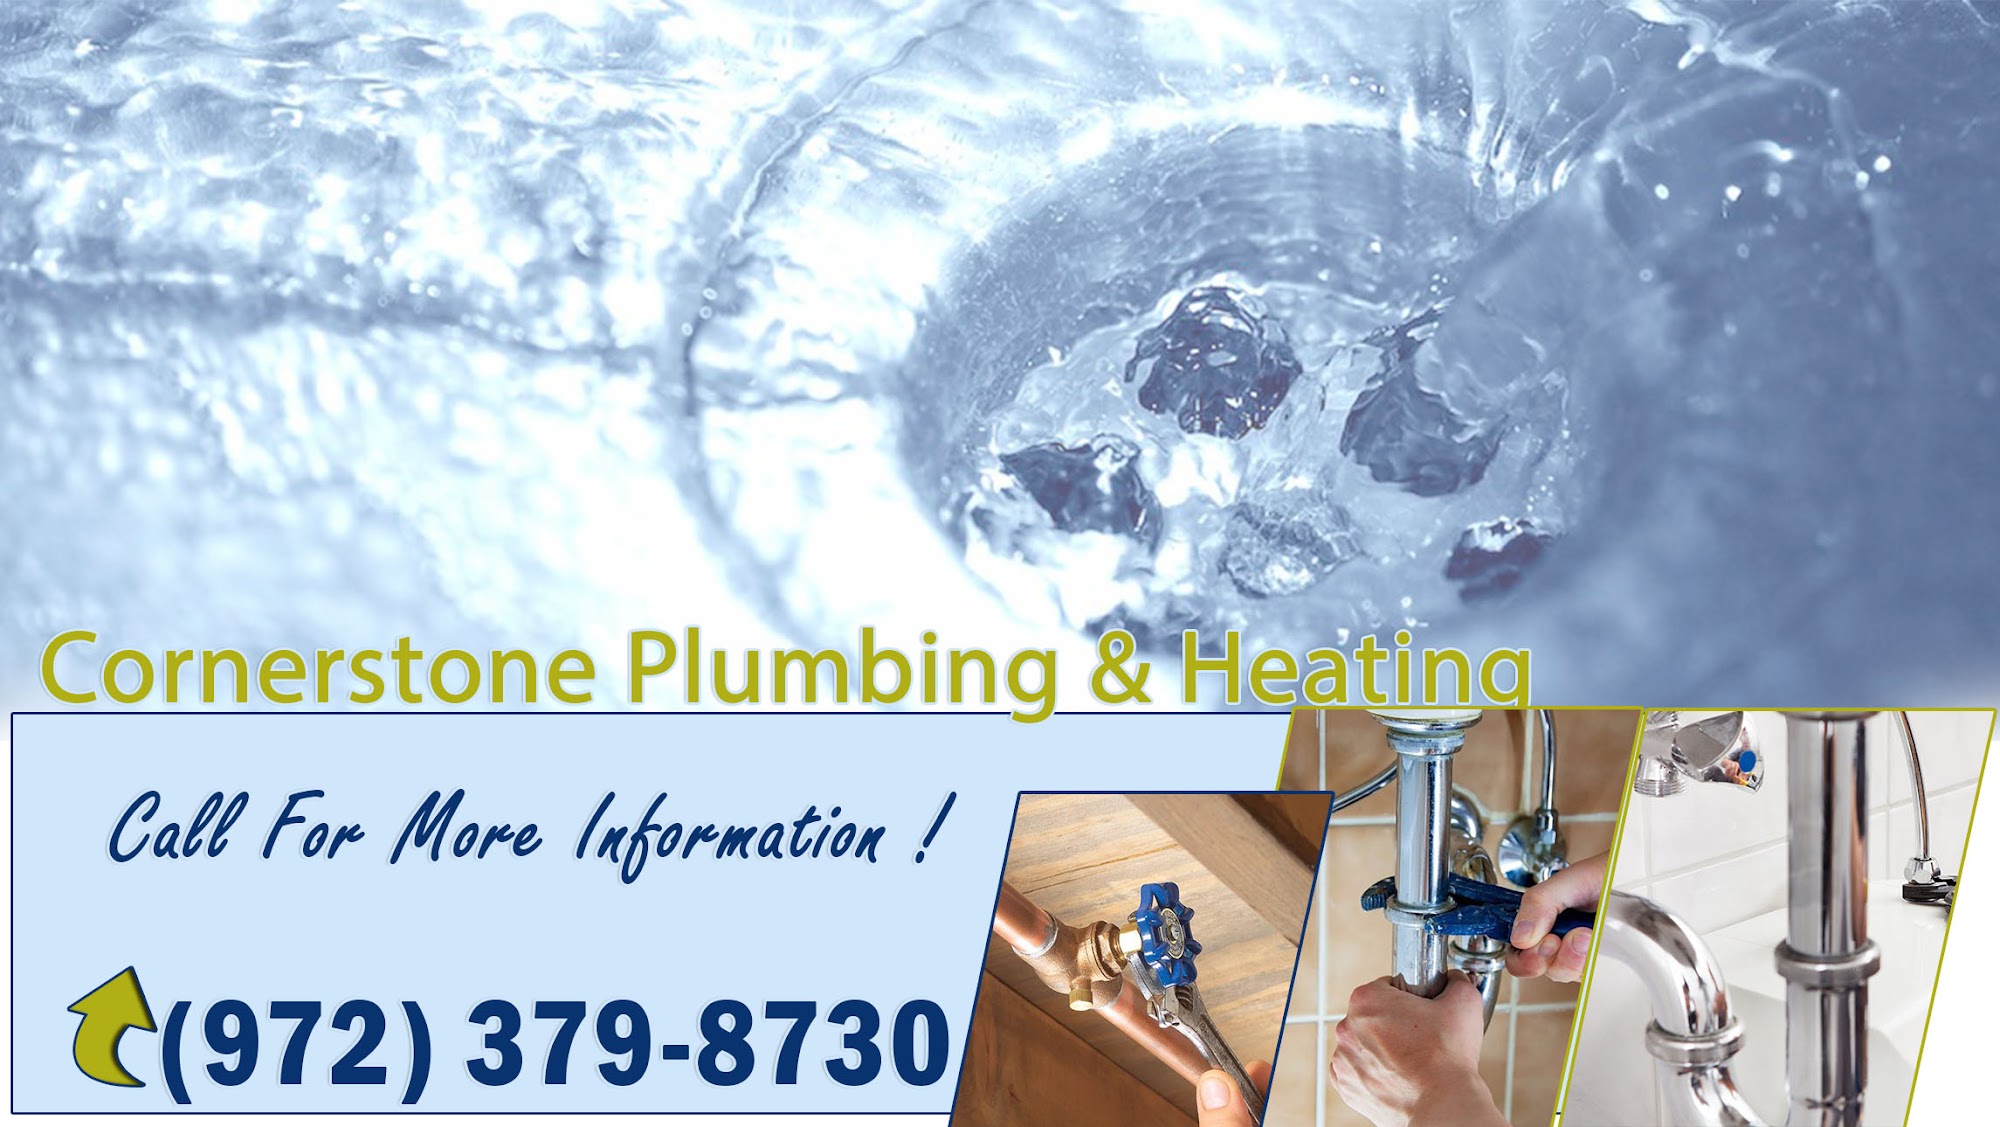 Cornerstone Plumbing & Heating 3026 Al Lipscomb Way, Dallas Maine 75215